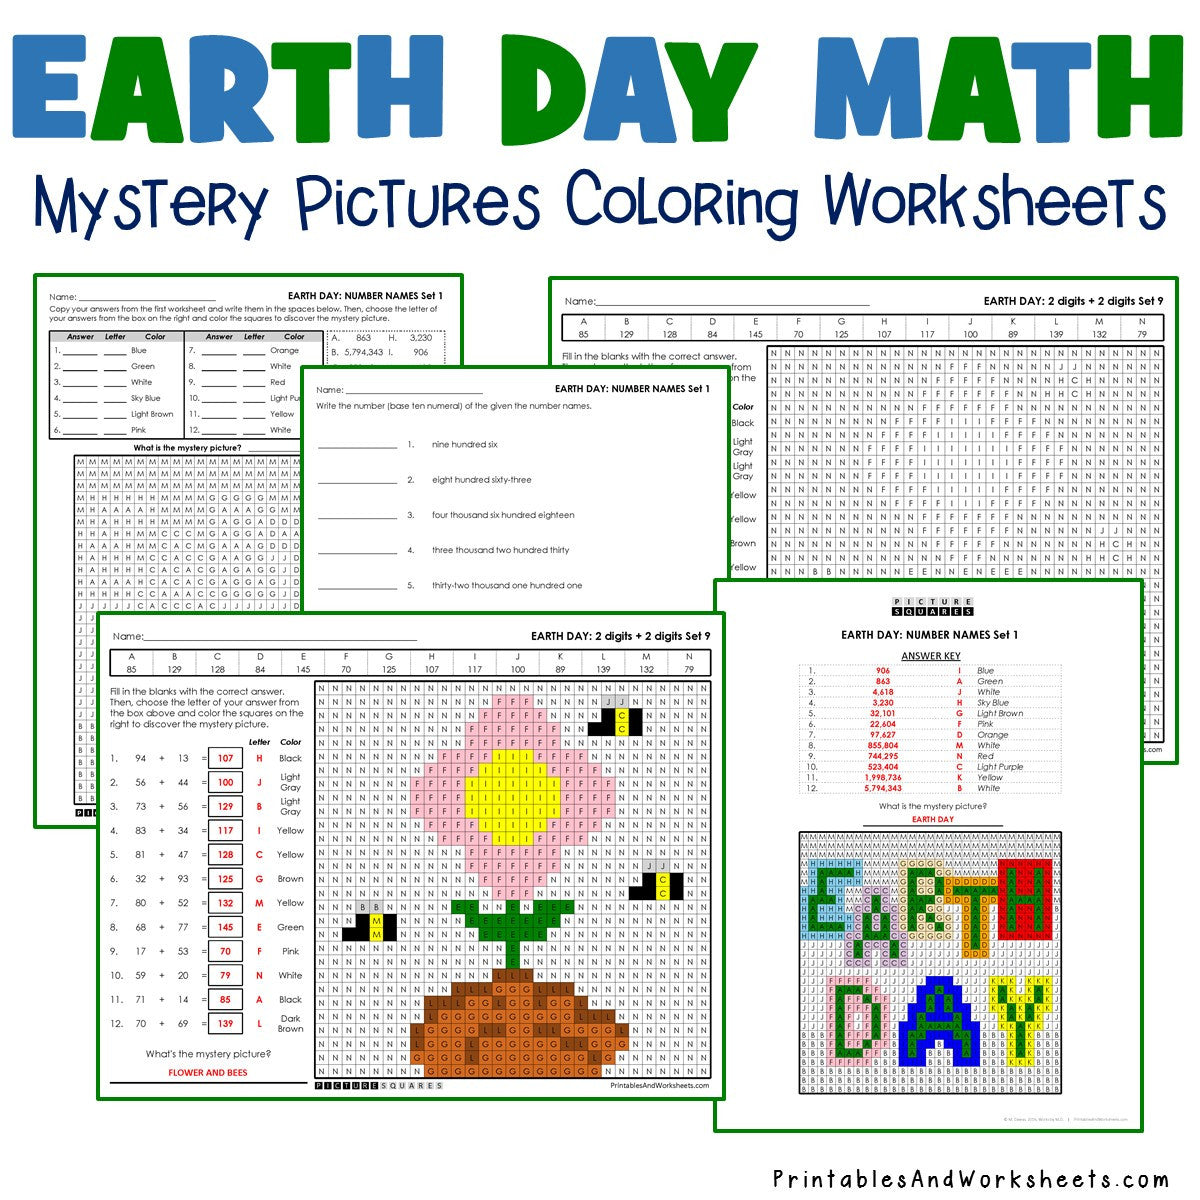 earth-day-math-coloring-worksheets-bundle-printables-worksheets